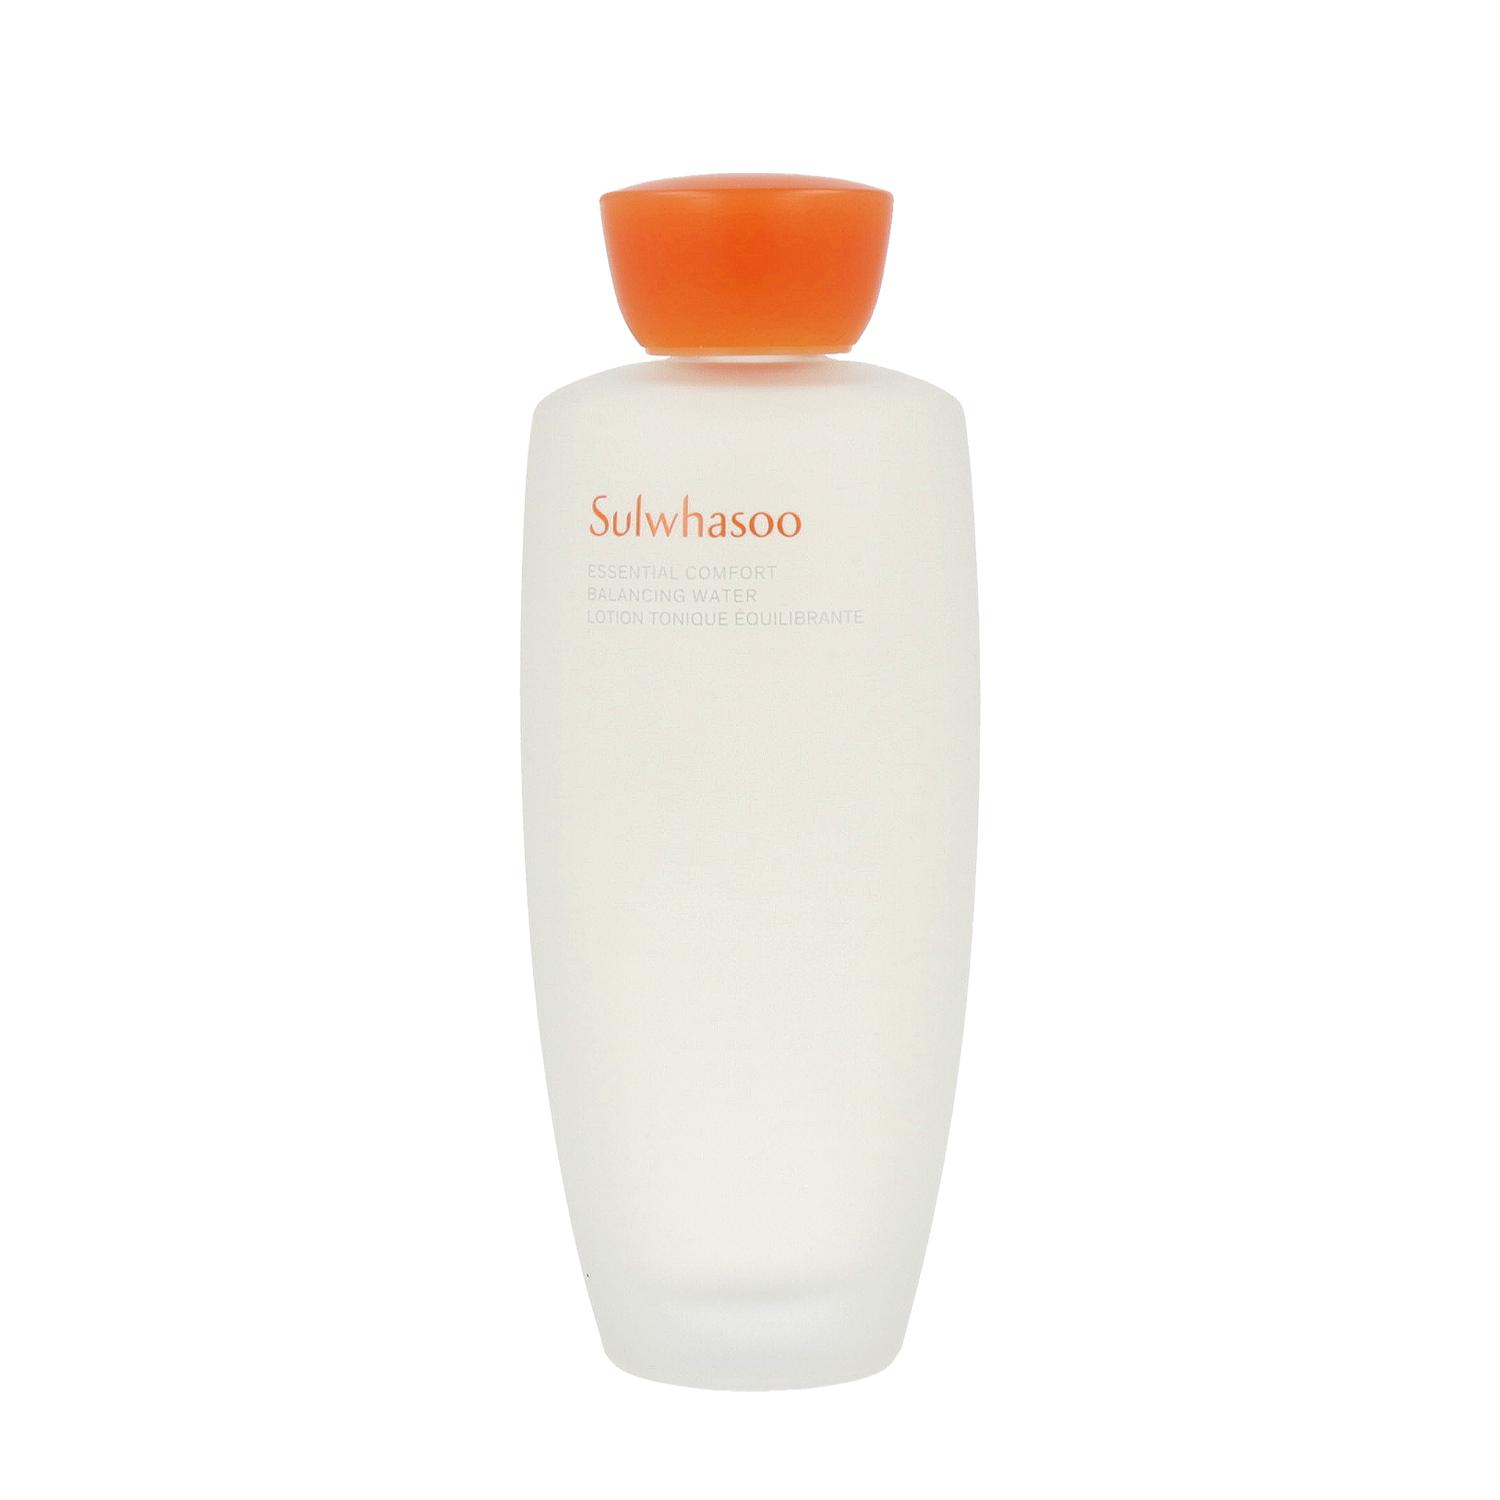 Sulwhasoo Essential Comfort Balancing Water 150ml - DODOSKIN